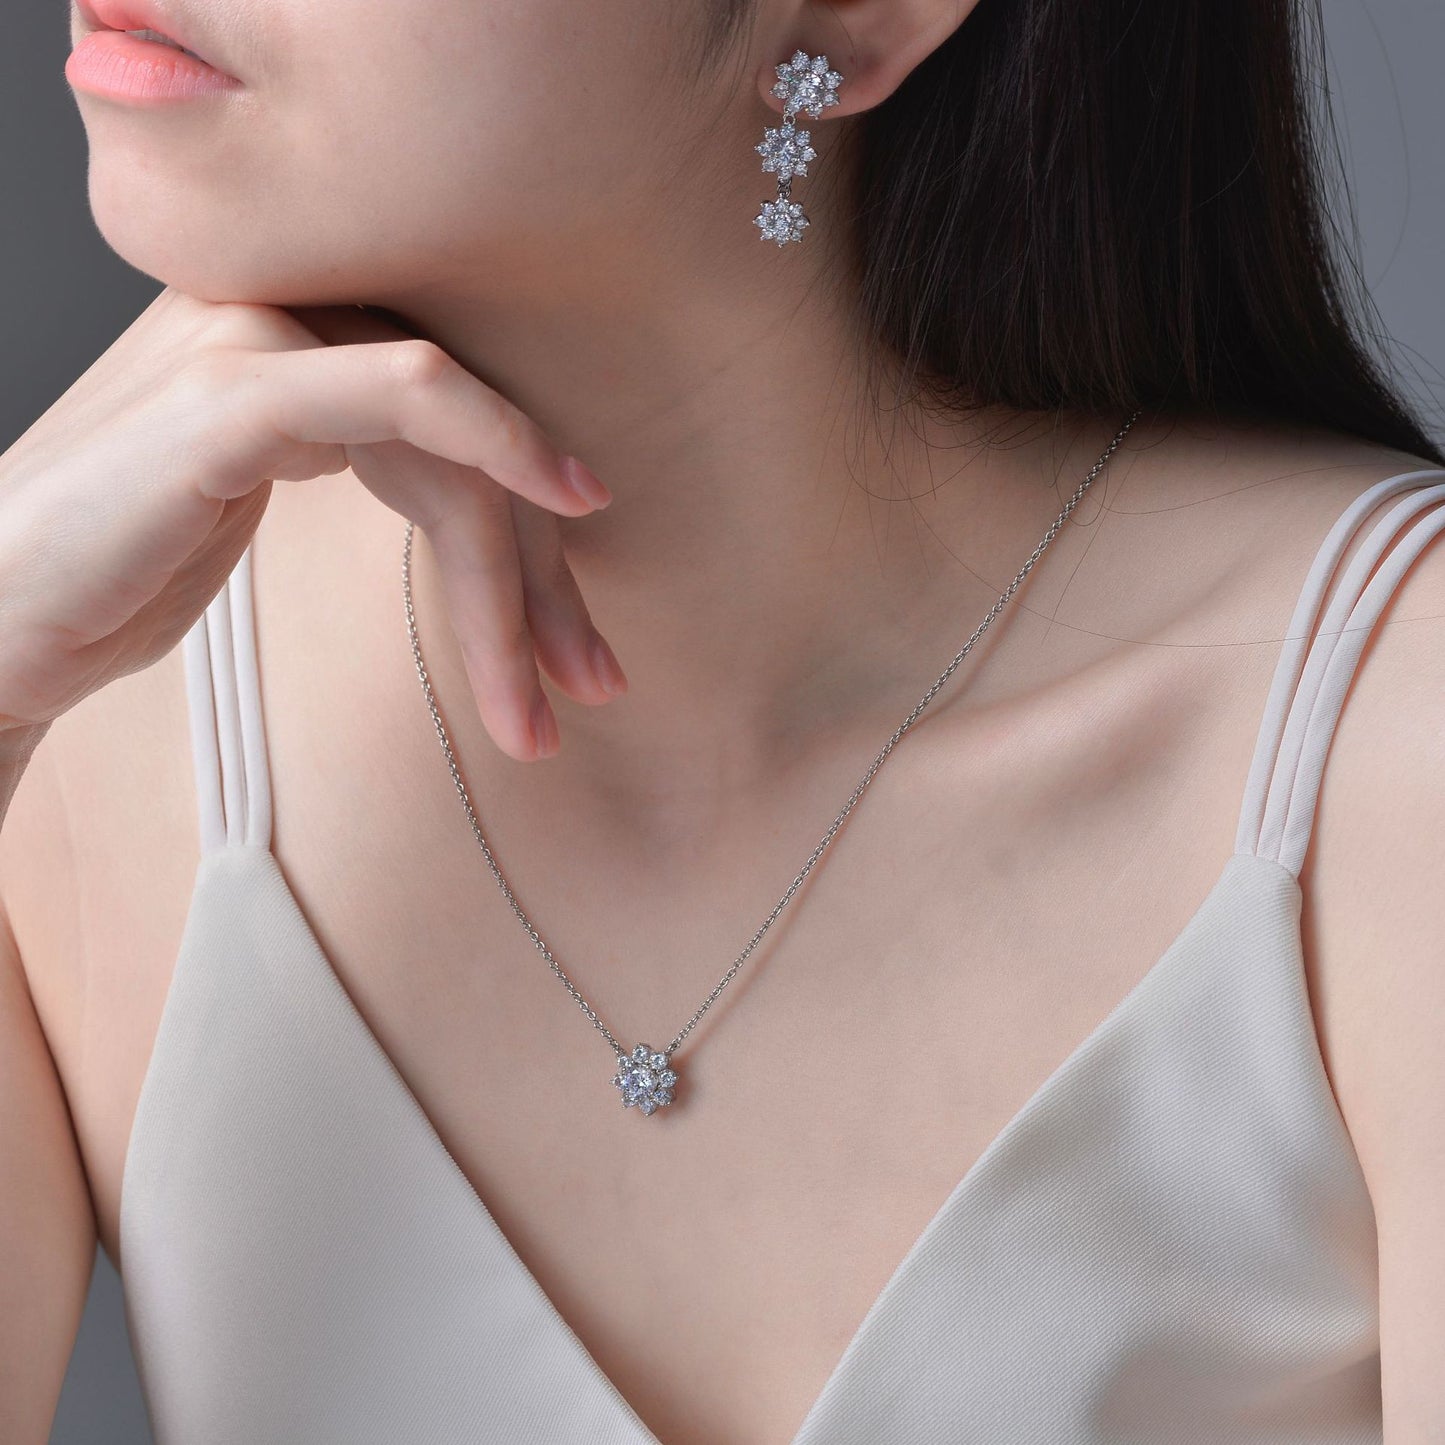 Sapphire Jewellery Floral Full Diamond Earrings